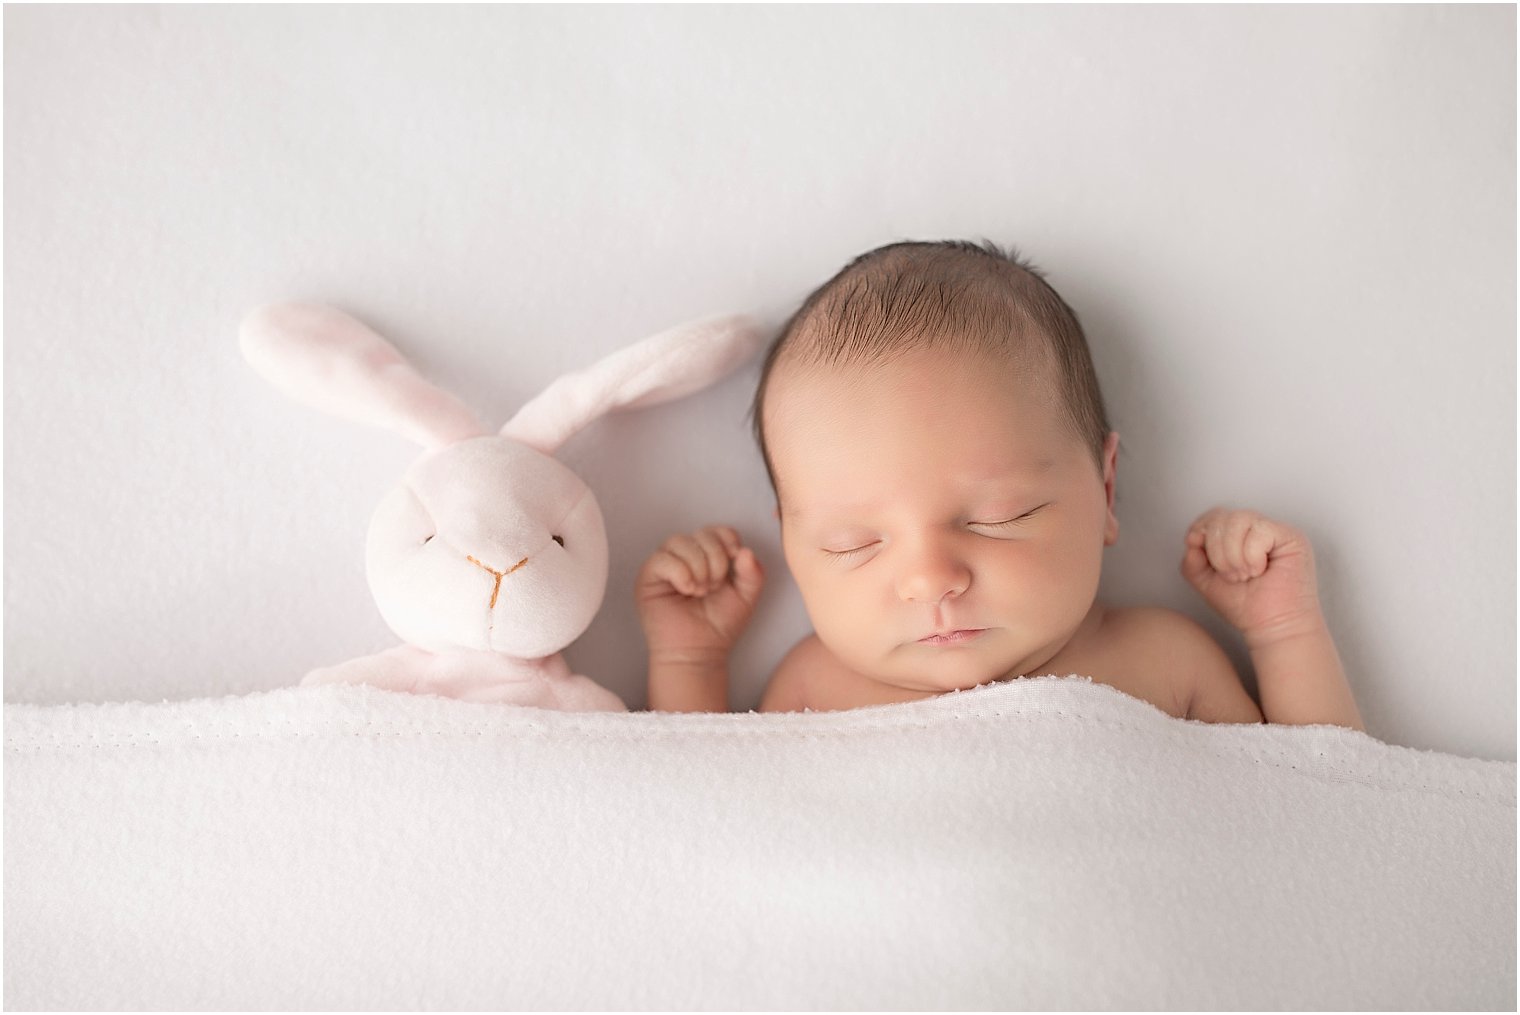 Sleeping newborn girl with bunny